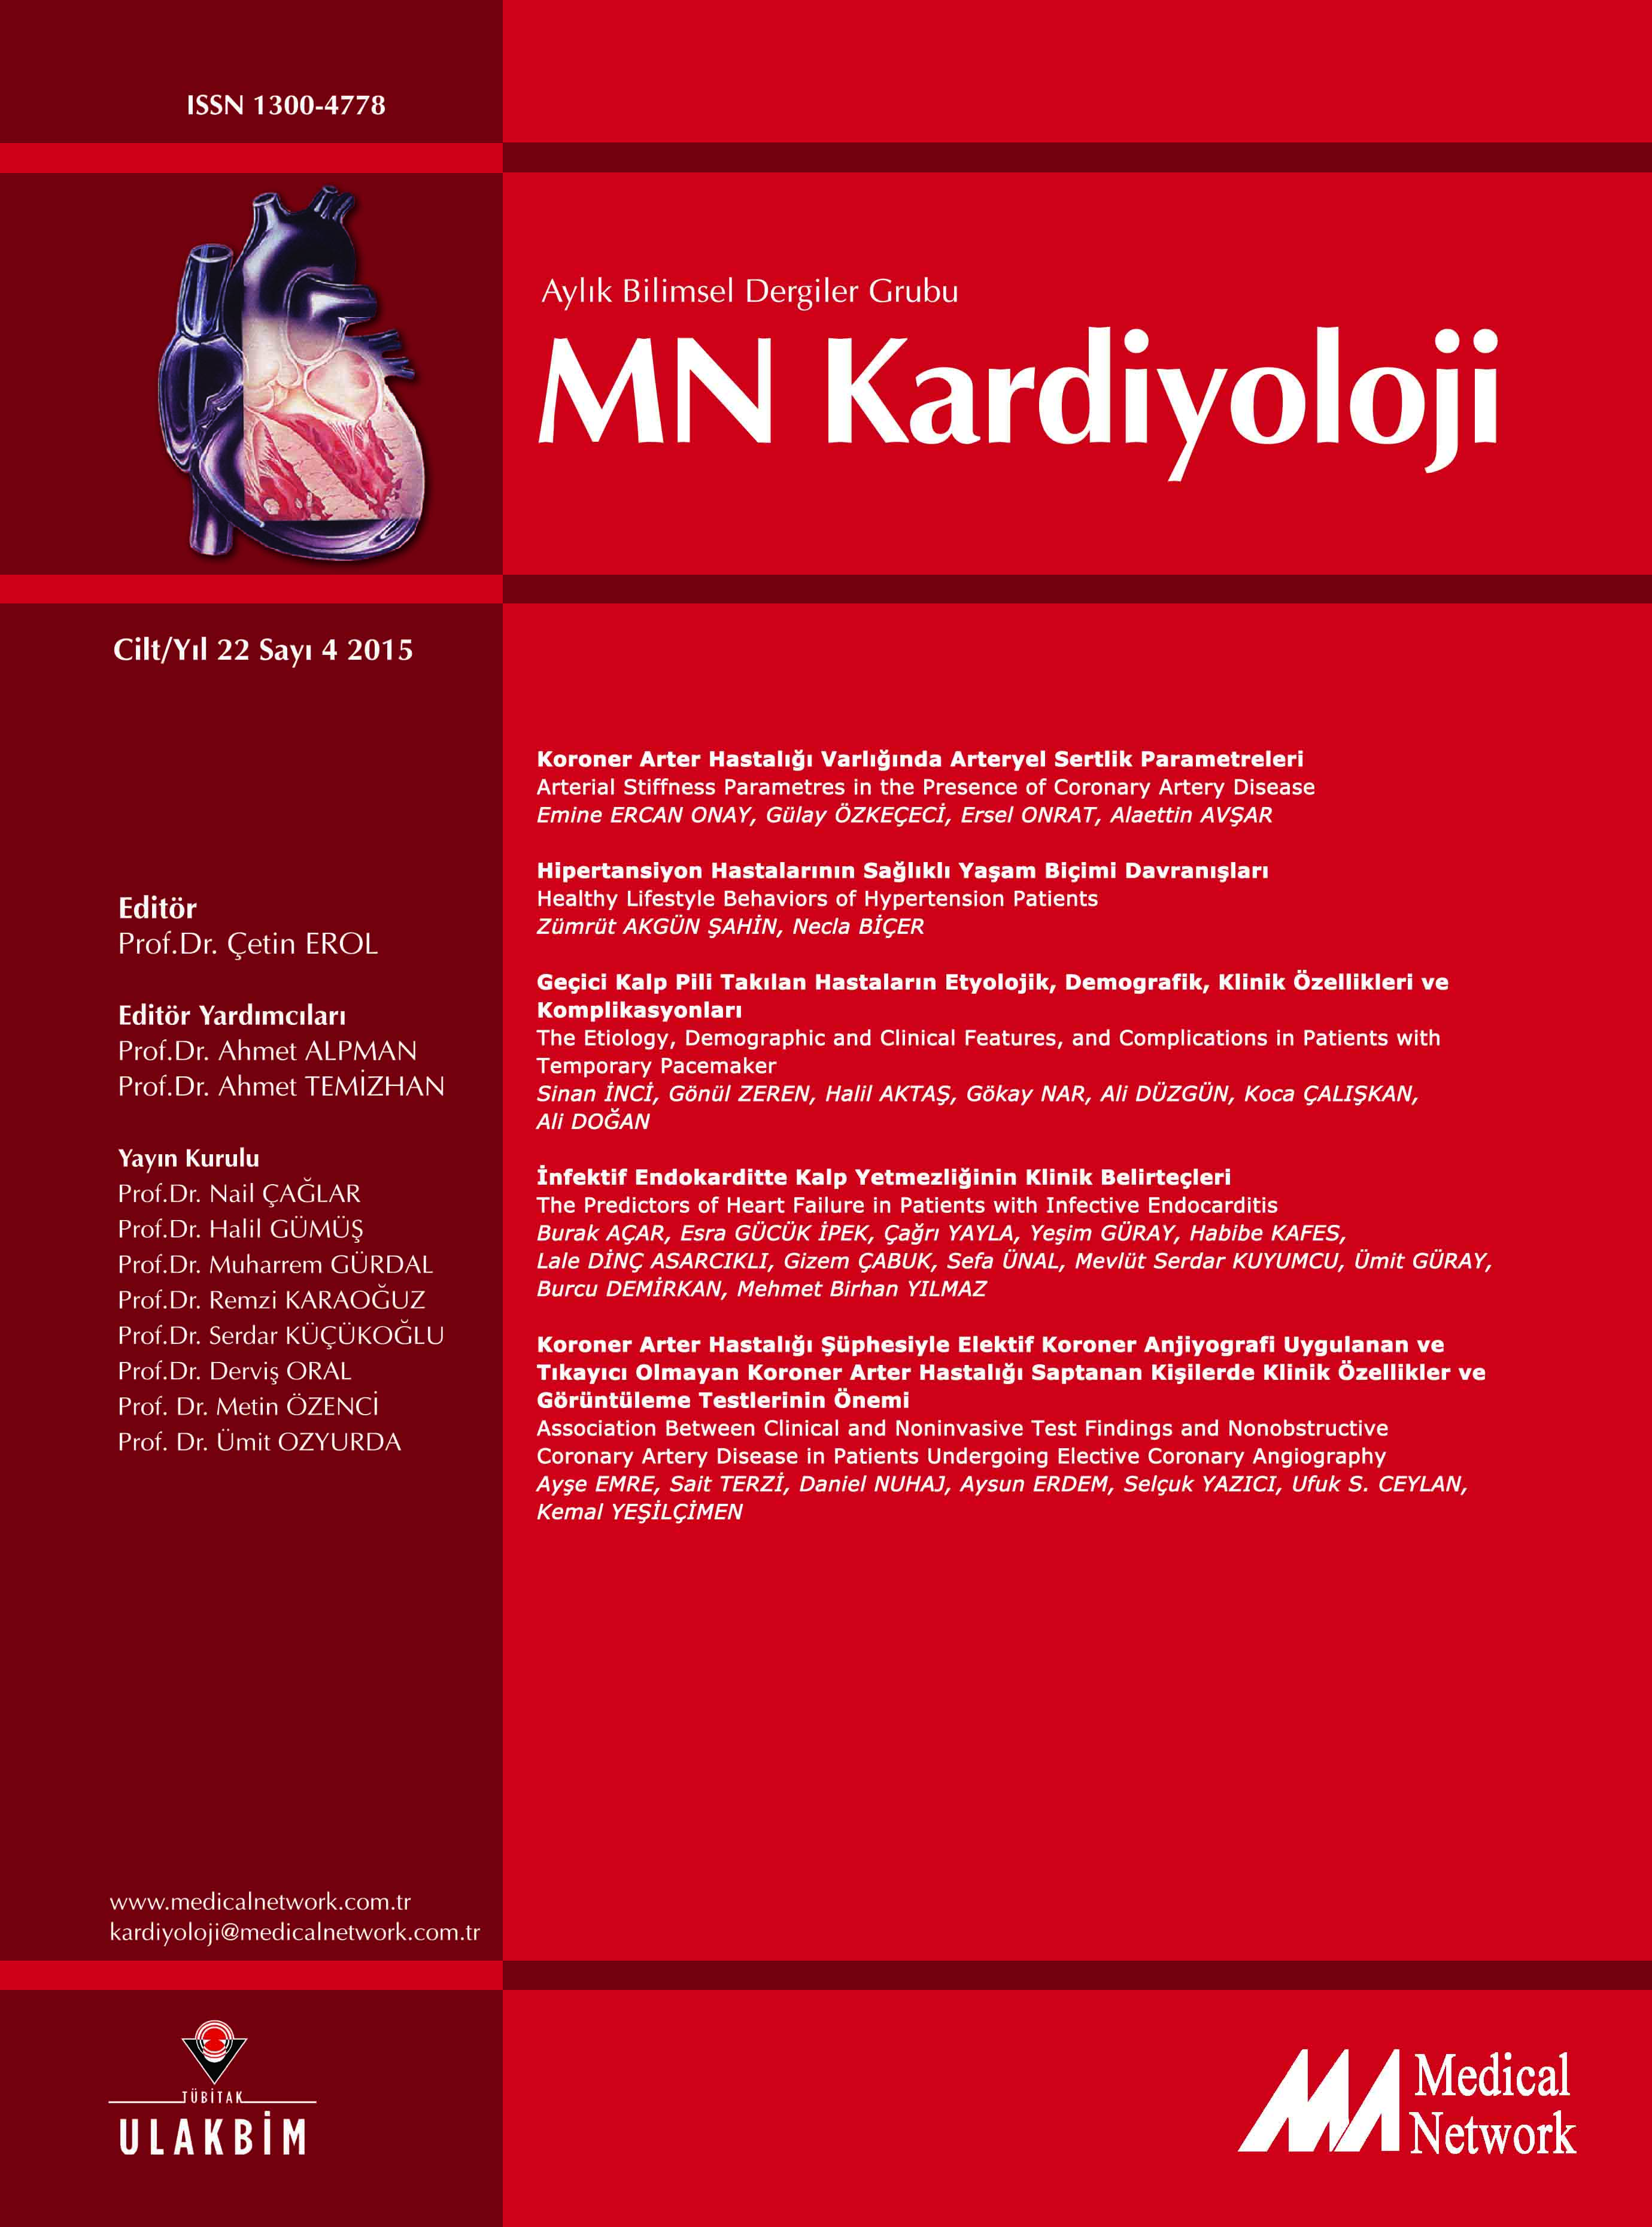 <p>MN Kardiyoloji Cilt: 22 Sayı: 4 2015 (MN Cardiology Volume: 22 No: 4 2015)</p>